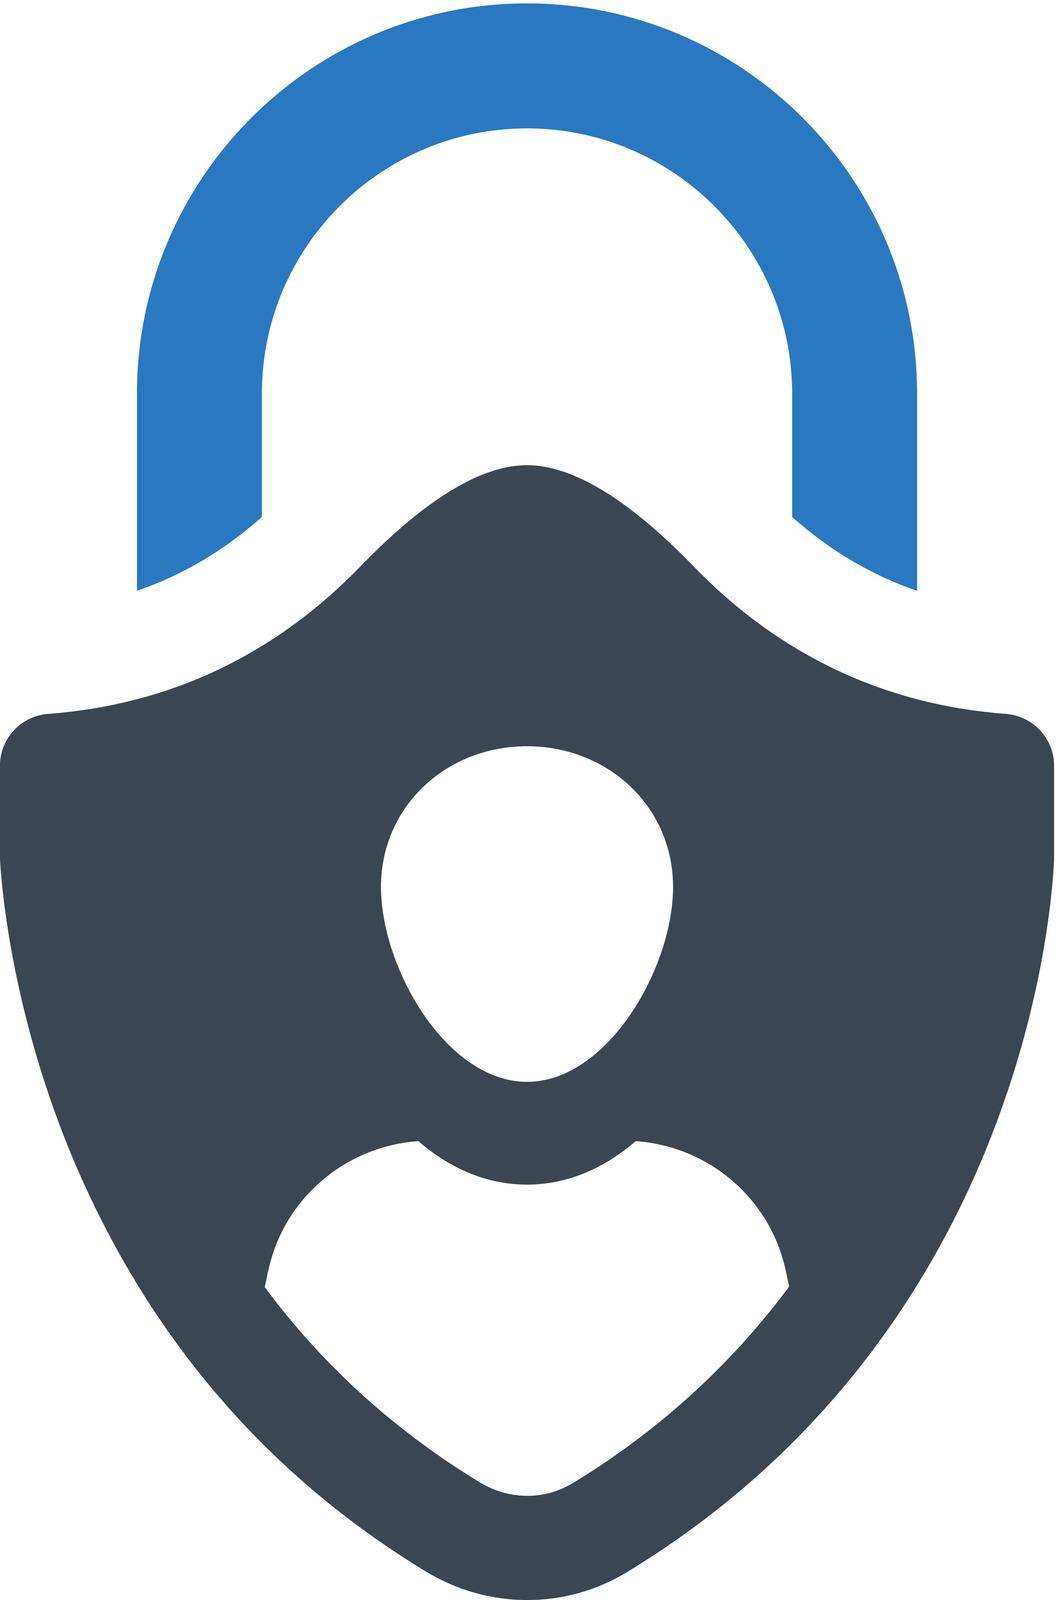 User privacy icon. Vector EPS file.